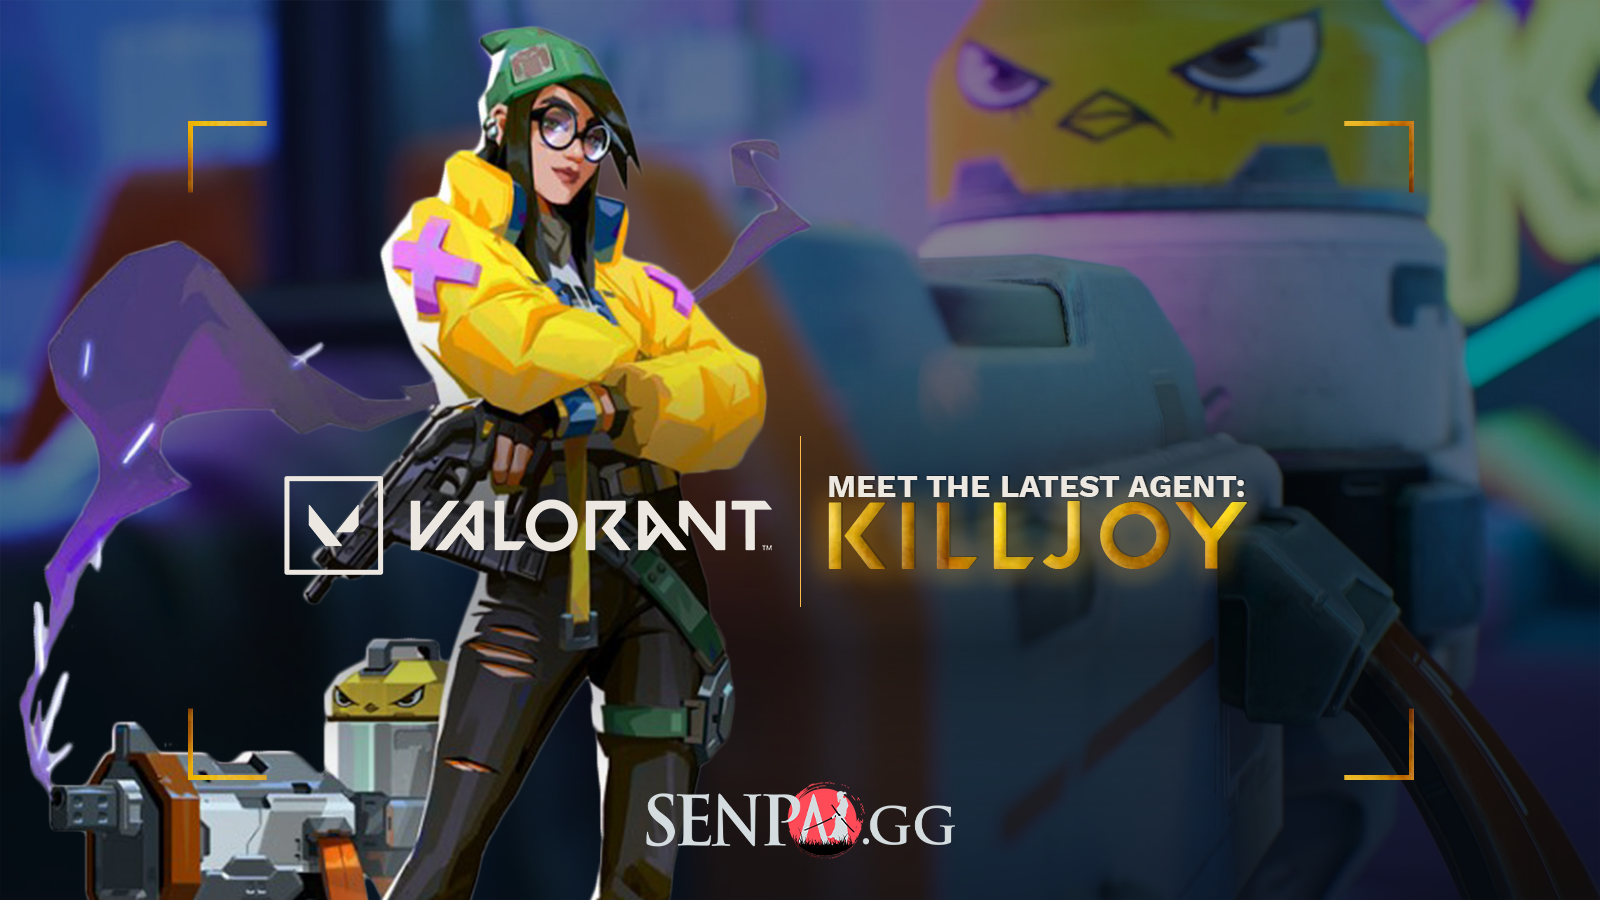 KILLJOY: Meet the Latest VALORANT Agent